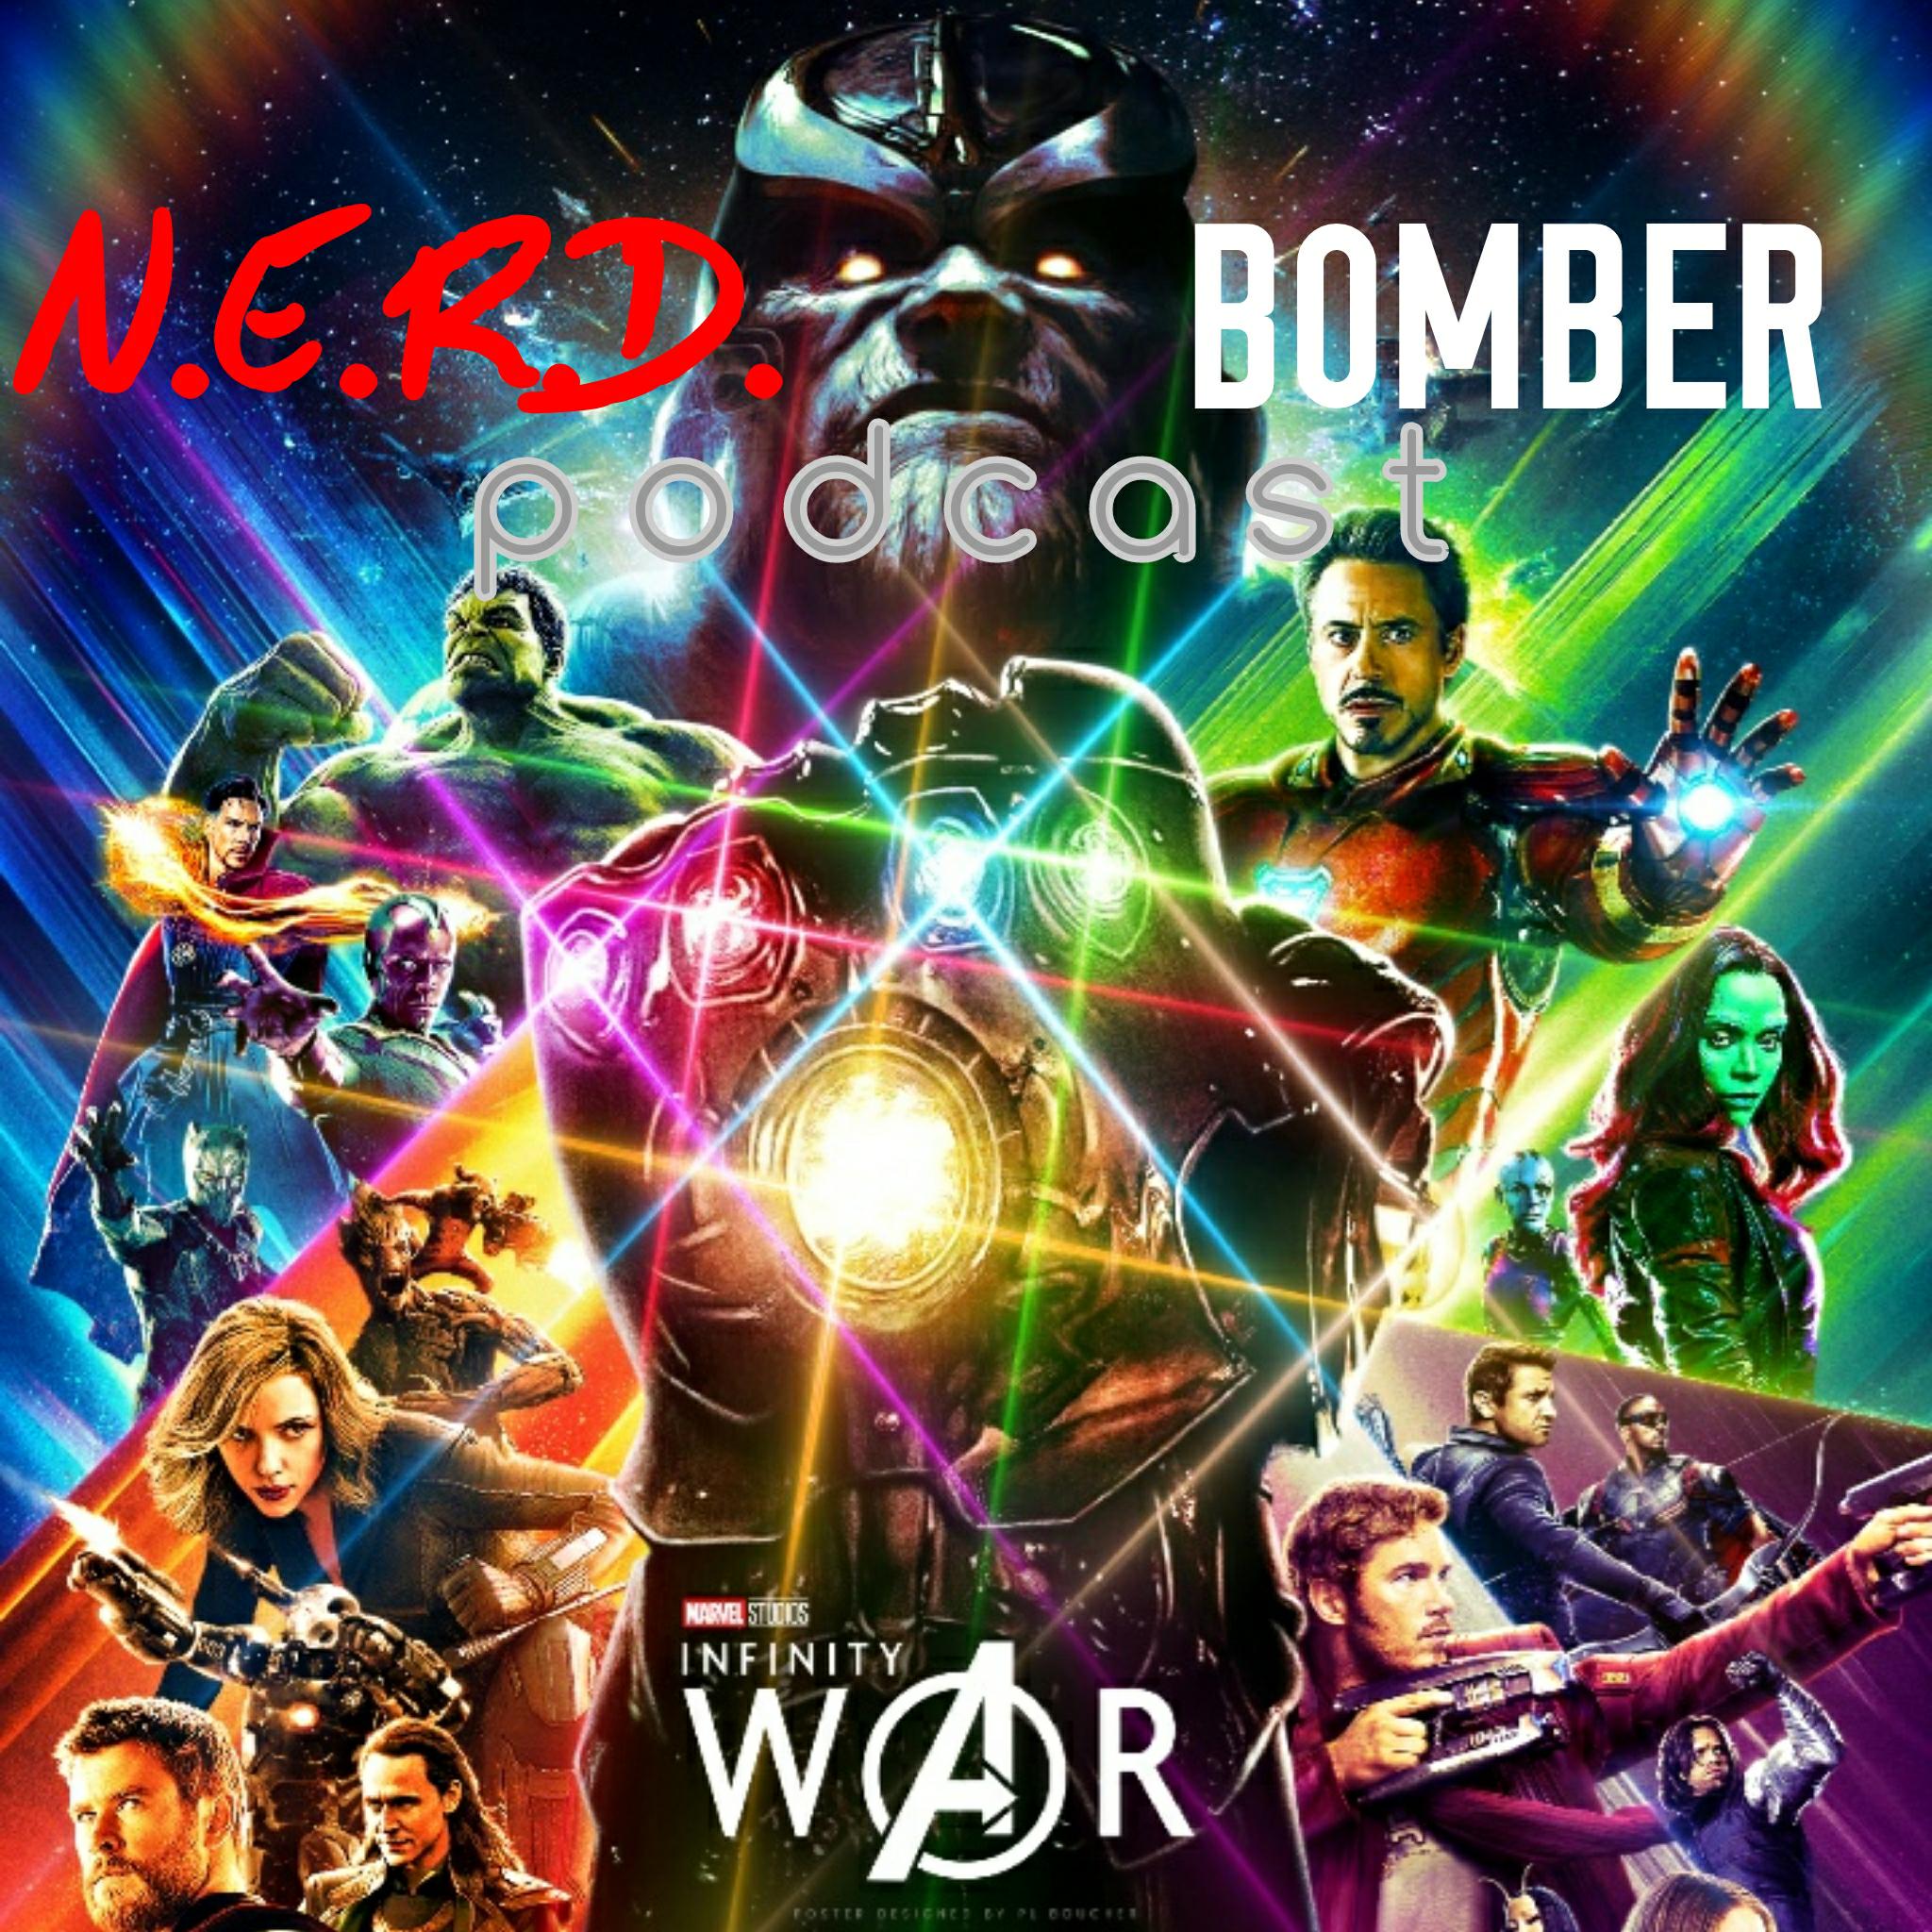 N.E.R.D.Bomber #13: We Review Avengers: Infinity War! *SPOILERS*